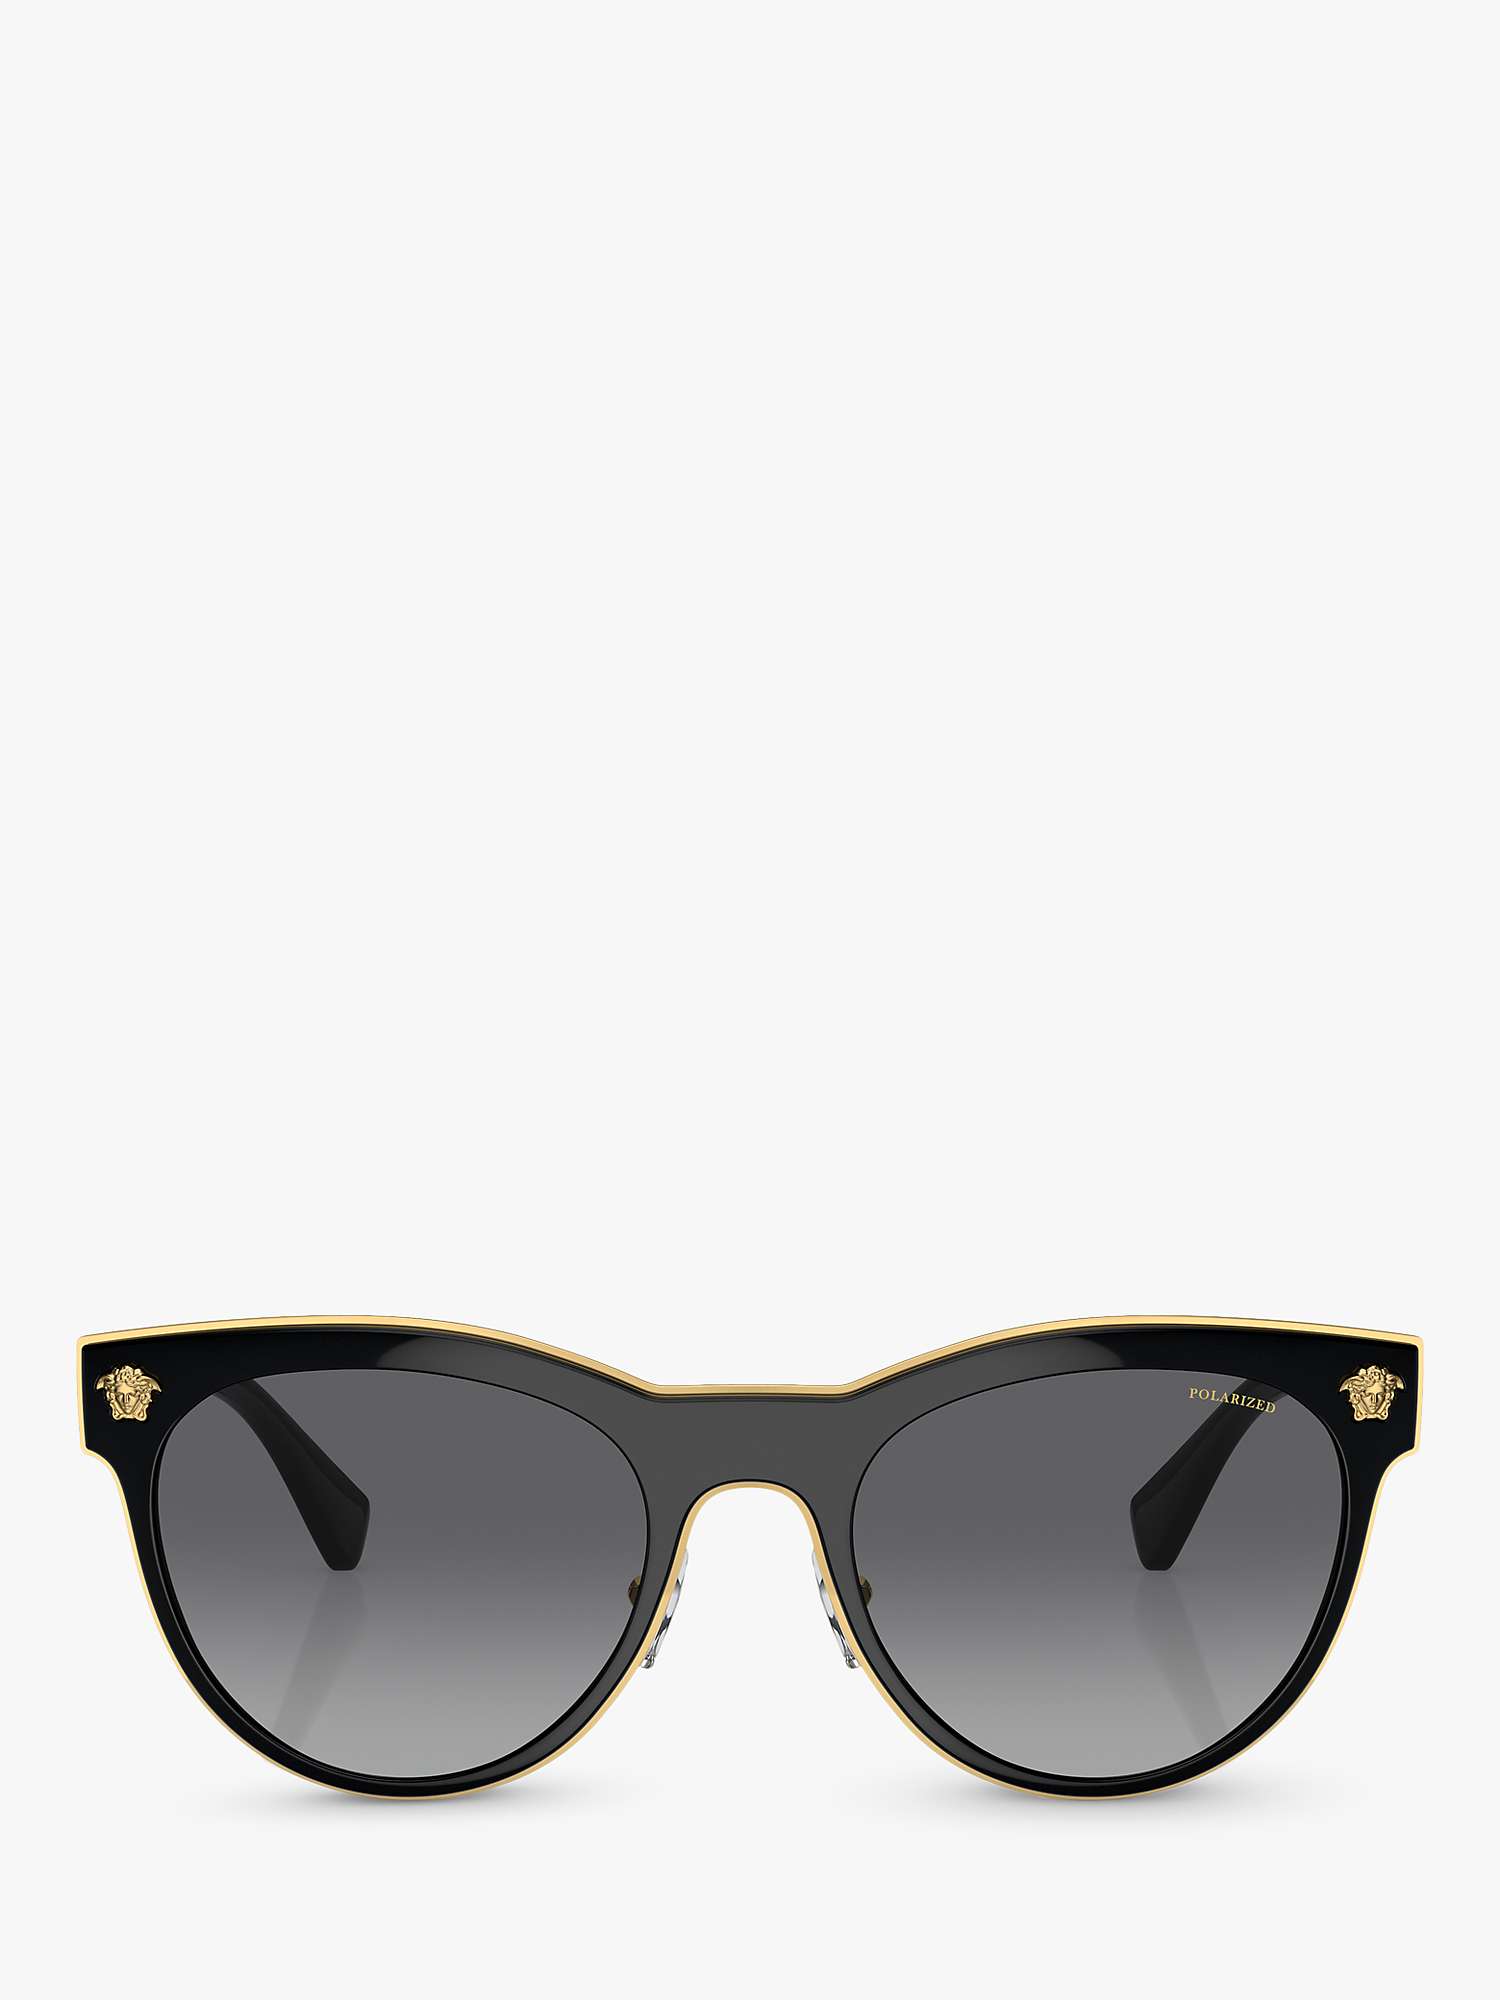 Buy Versace VE2198 Women's Oval Sunglasses, Black/Grey Online at johnlewis.com